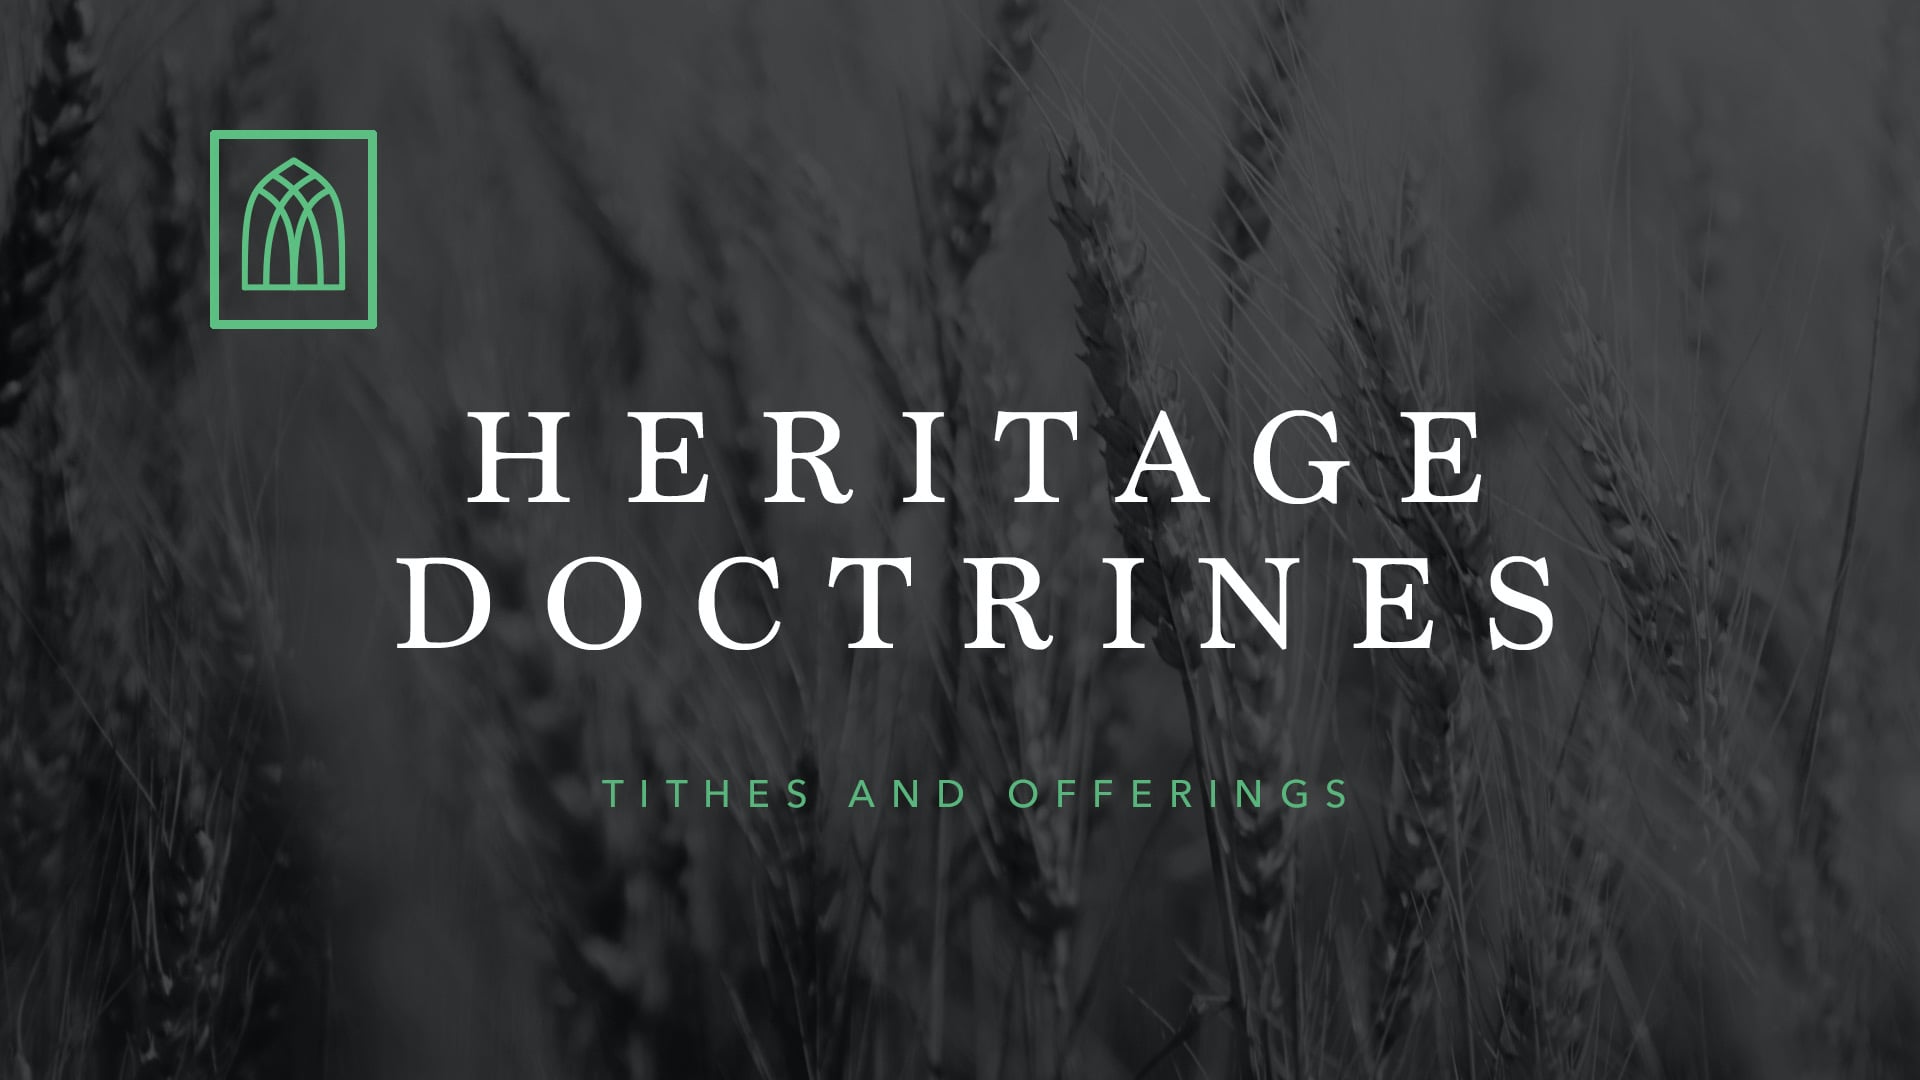 Heritage Doctrines: Tithing